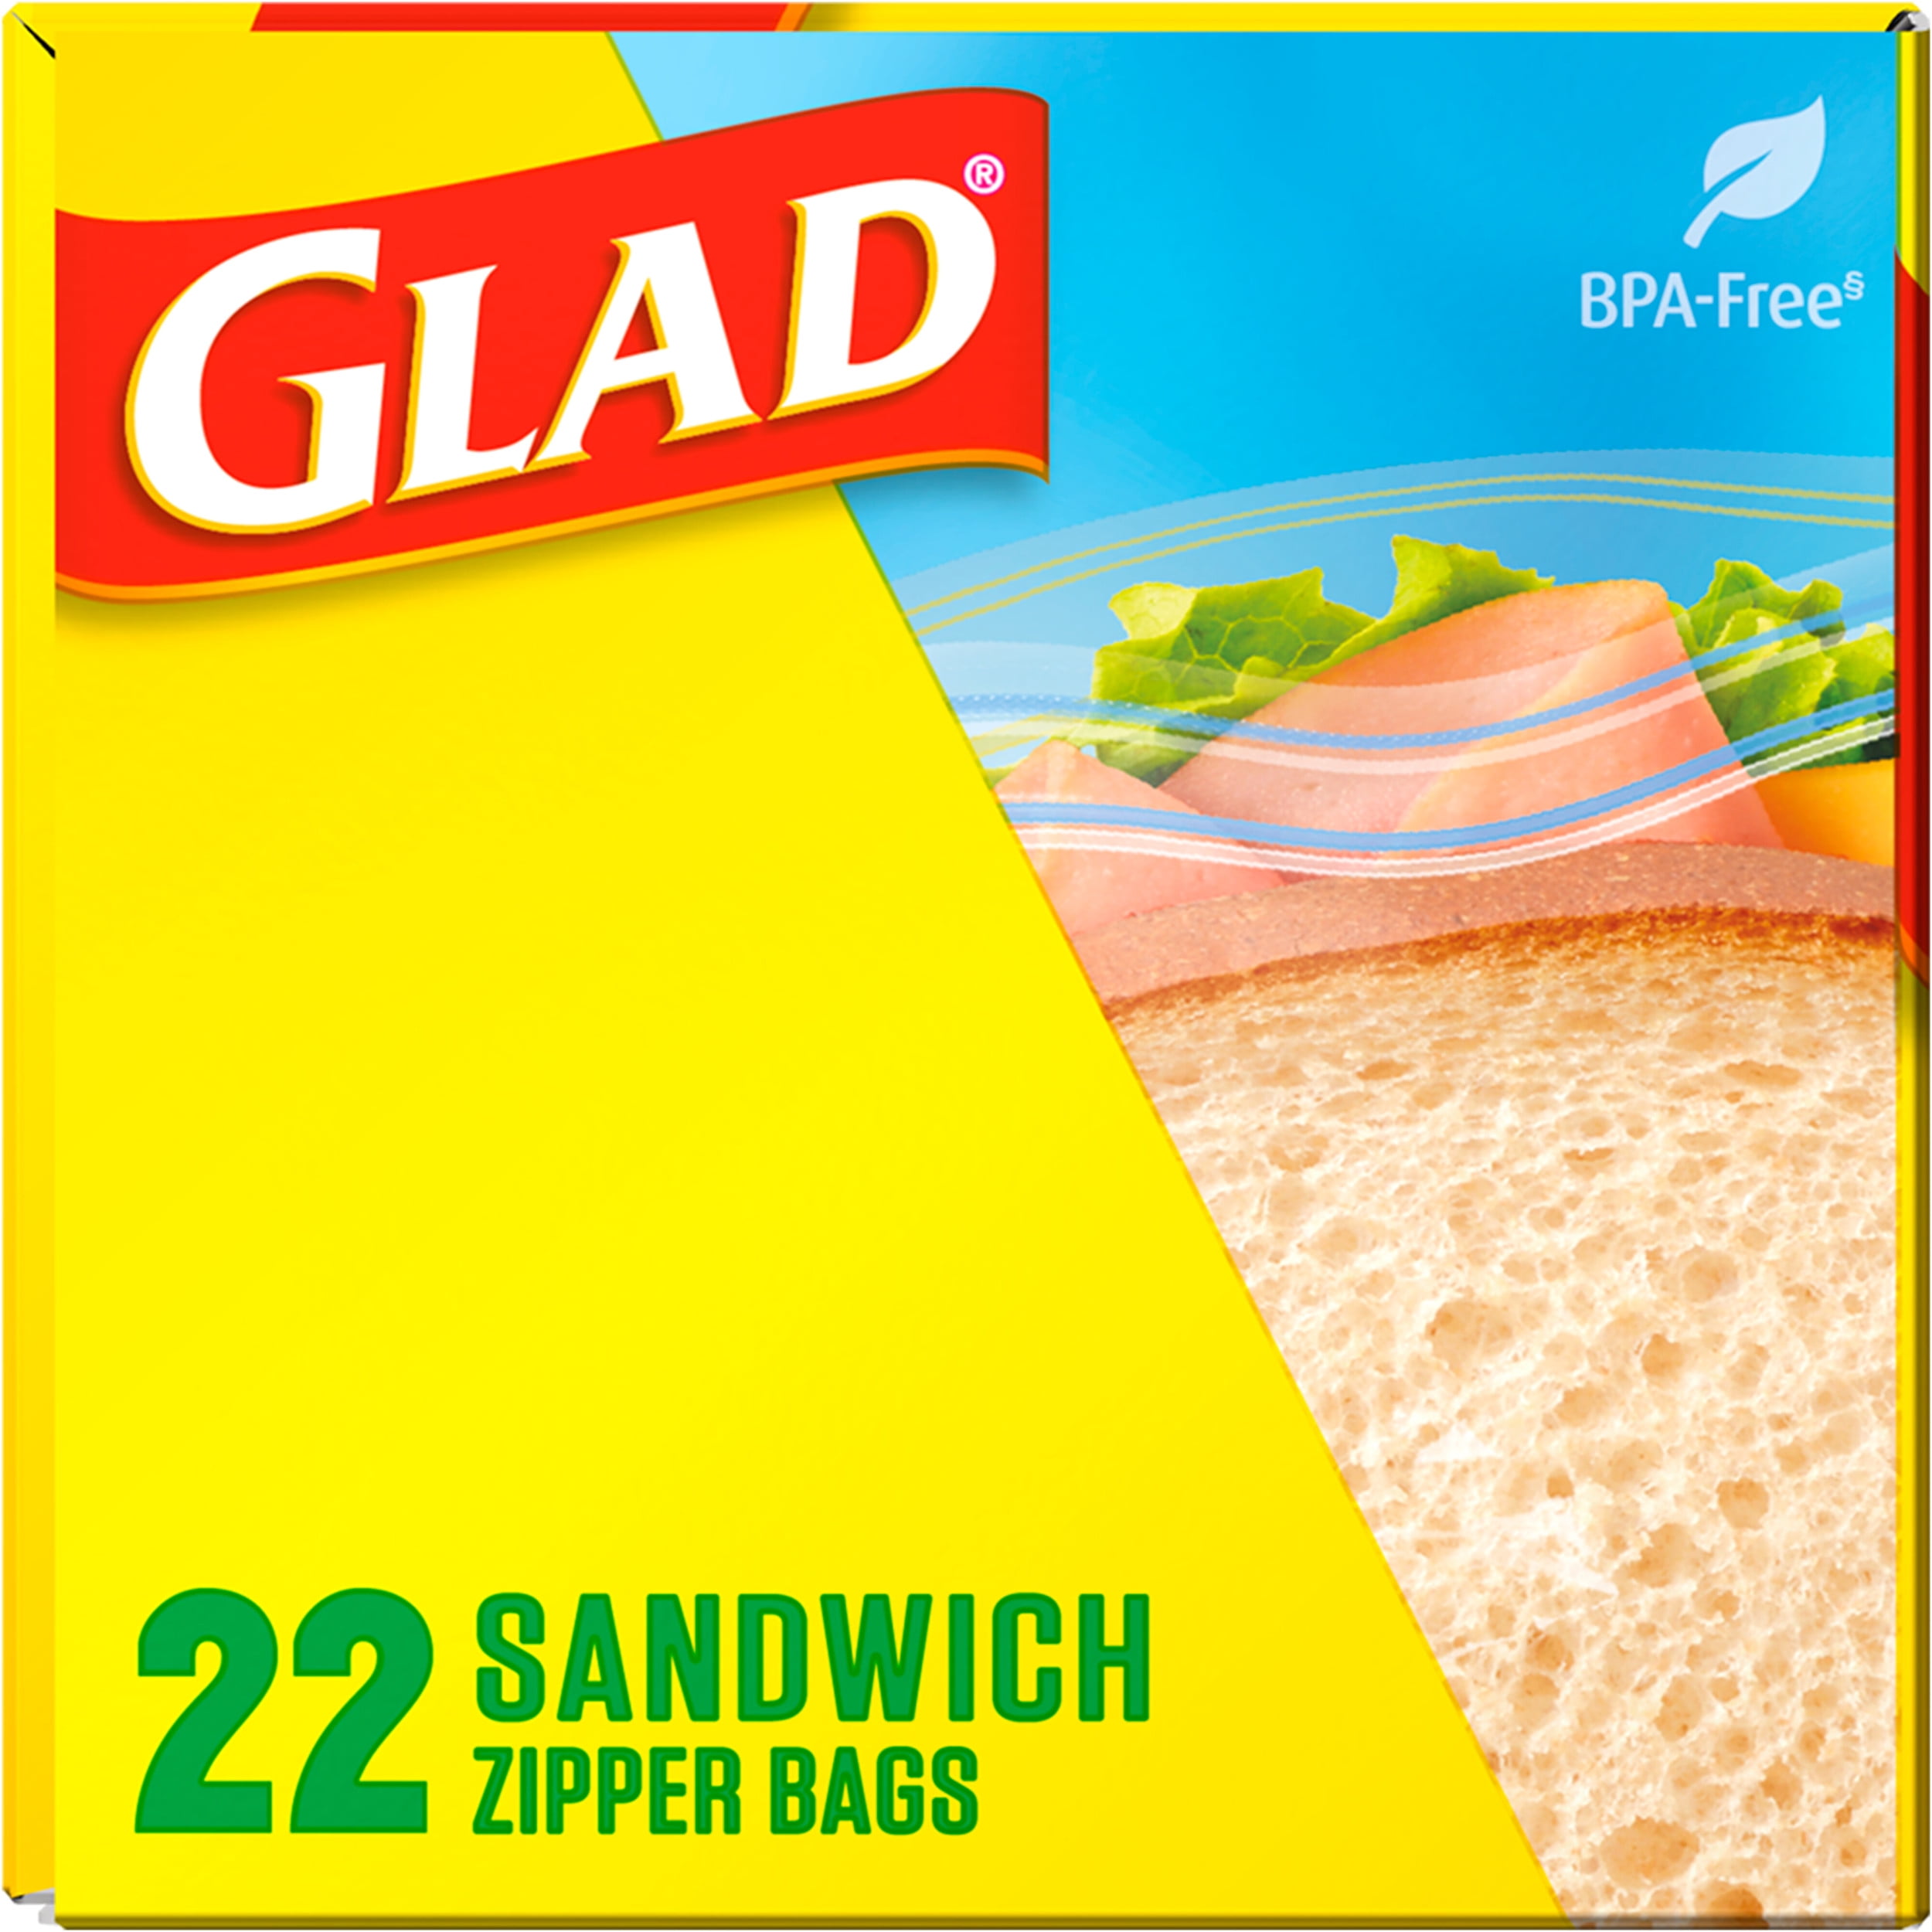 Glad Zipper Bags, Sandwich